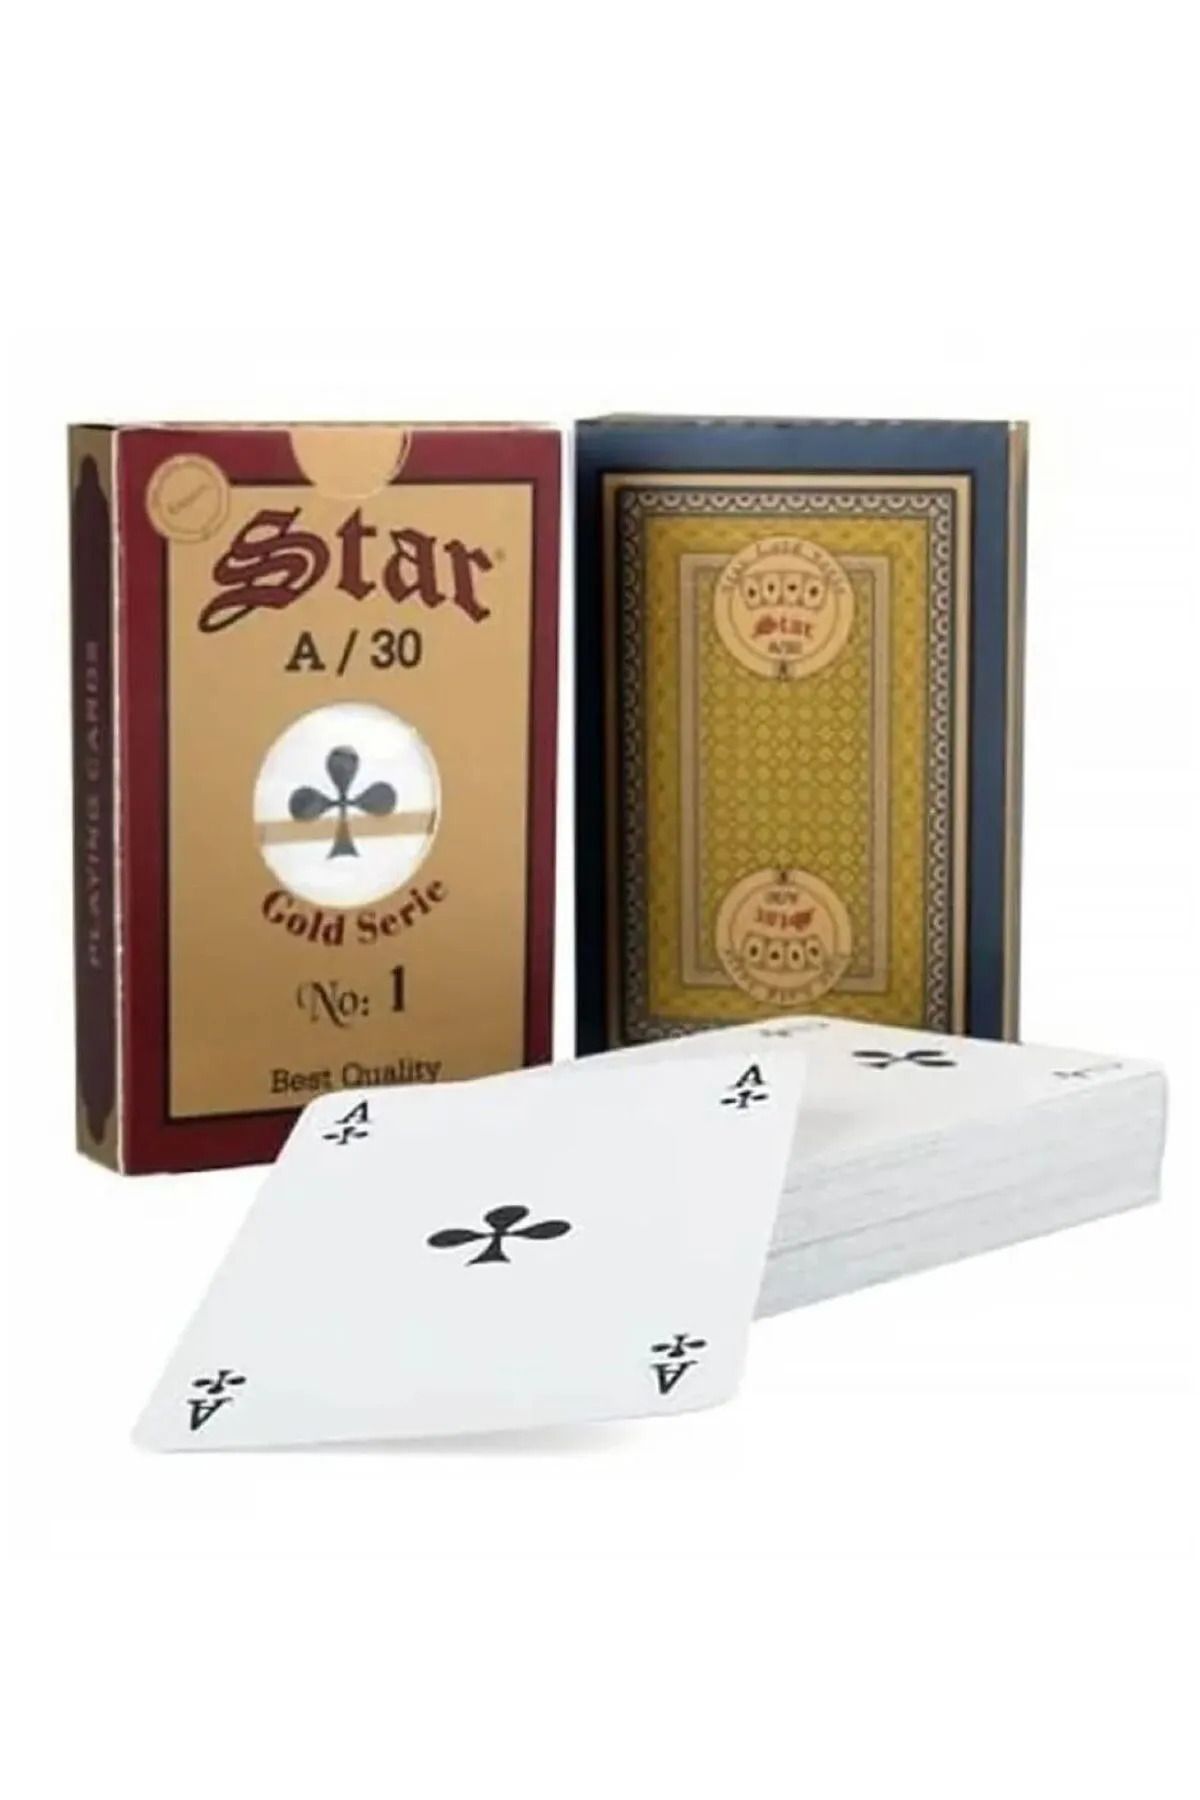 Star Oyun Star Gold Serisi A/30 Iskambil Kağıdı - Çift Deste